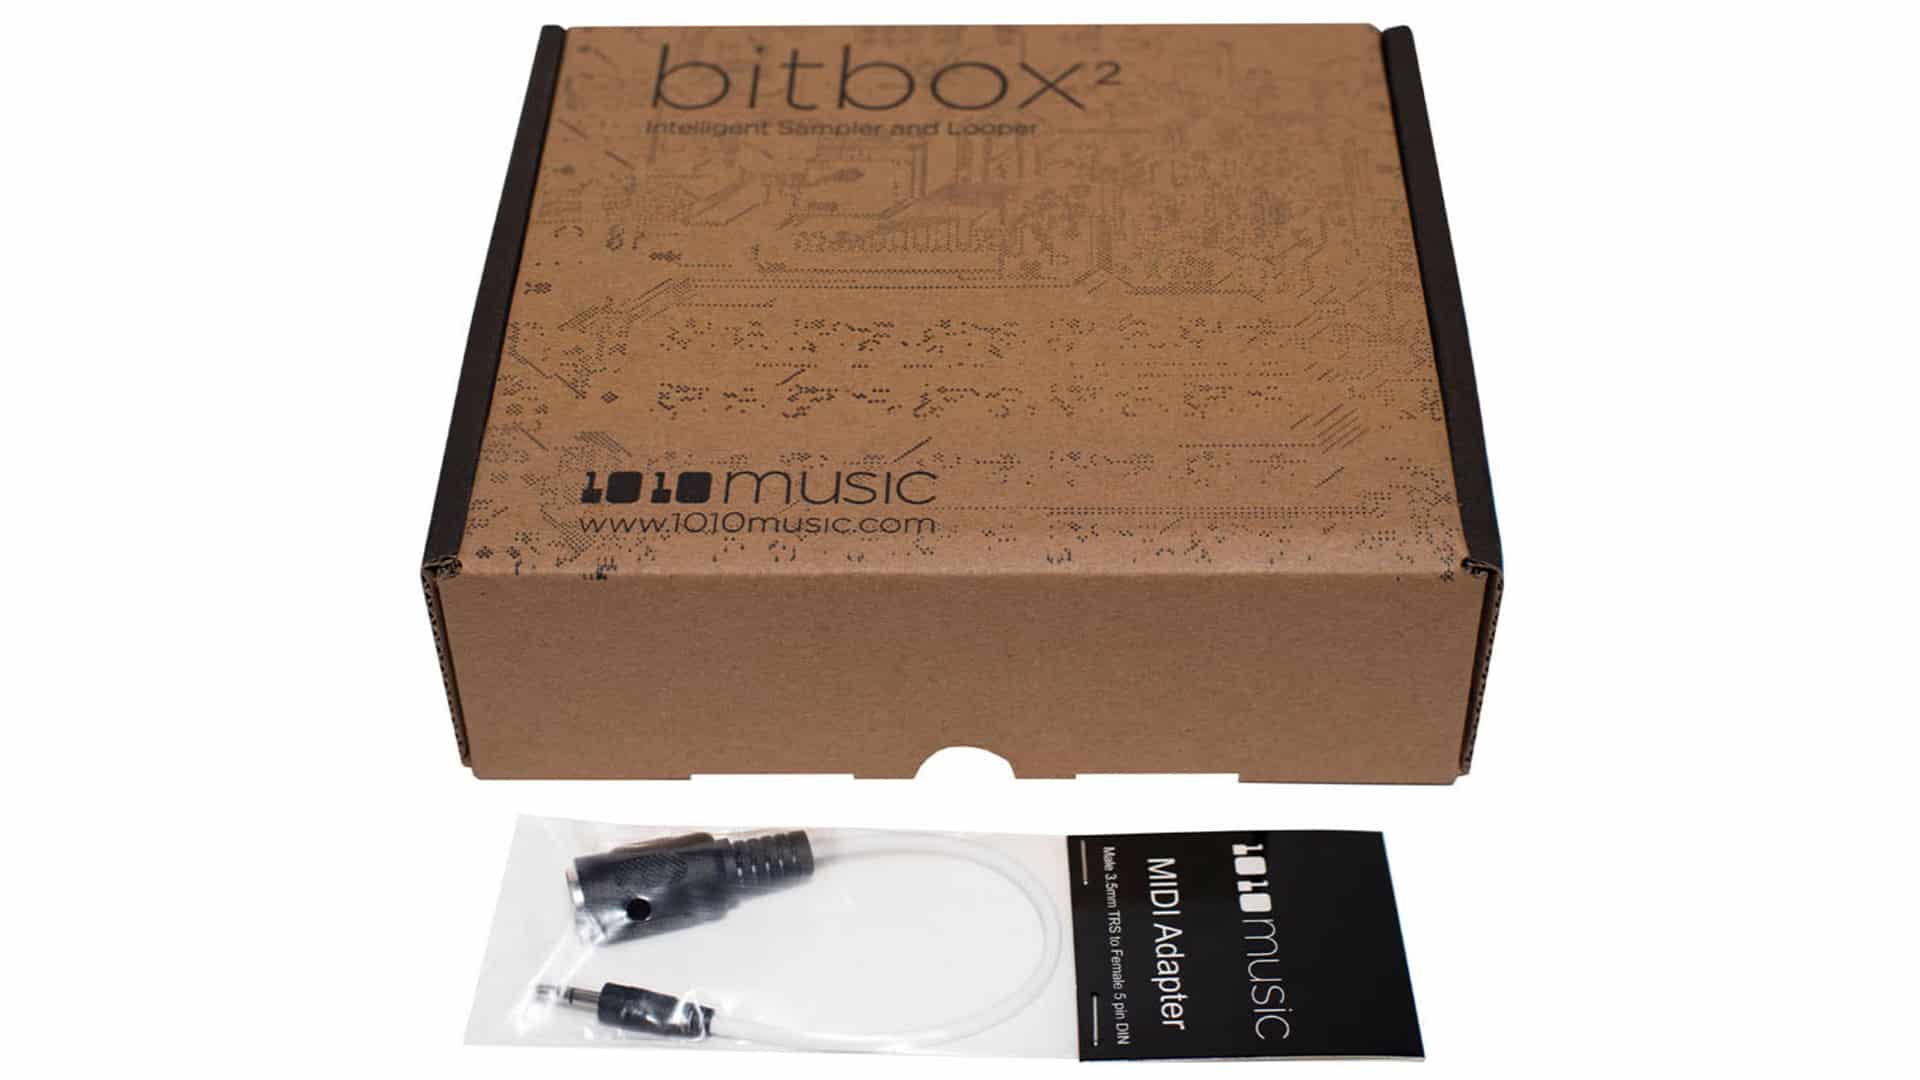 1010music bitbox mk2 Black Edition